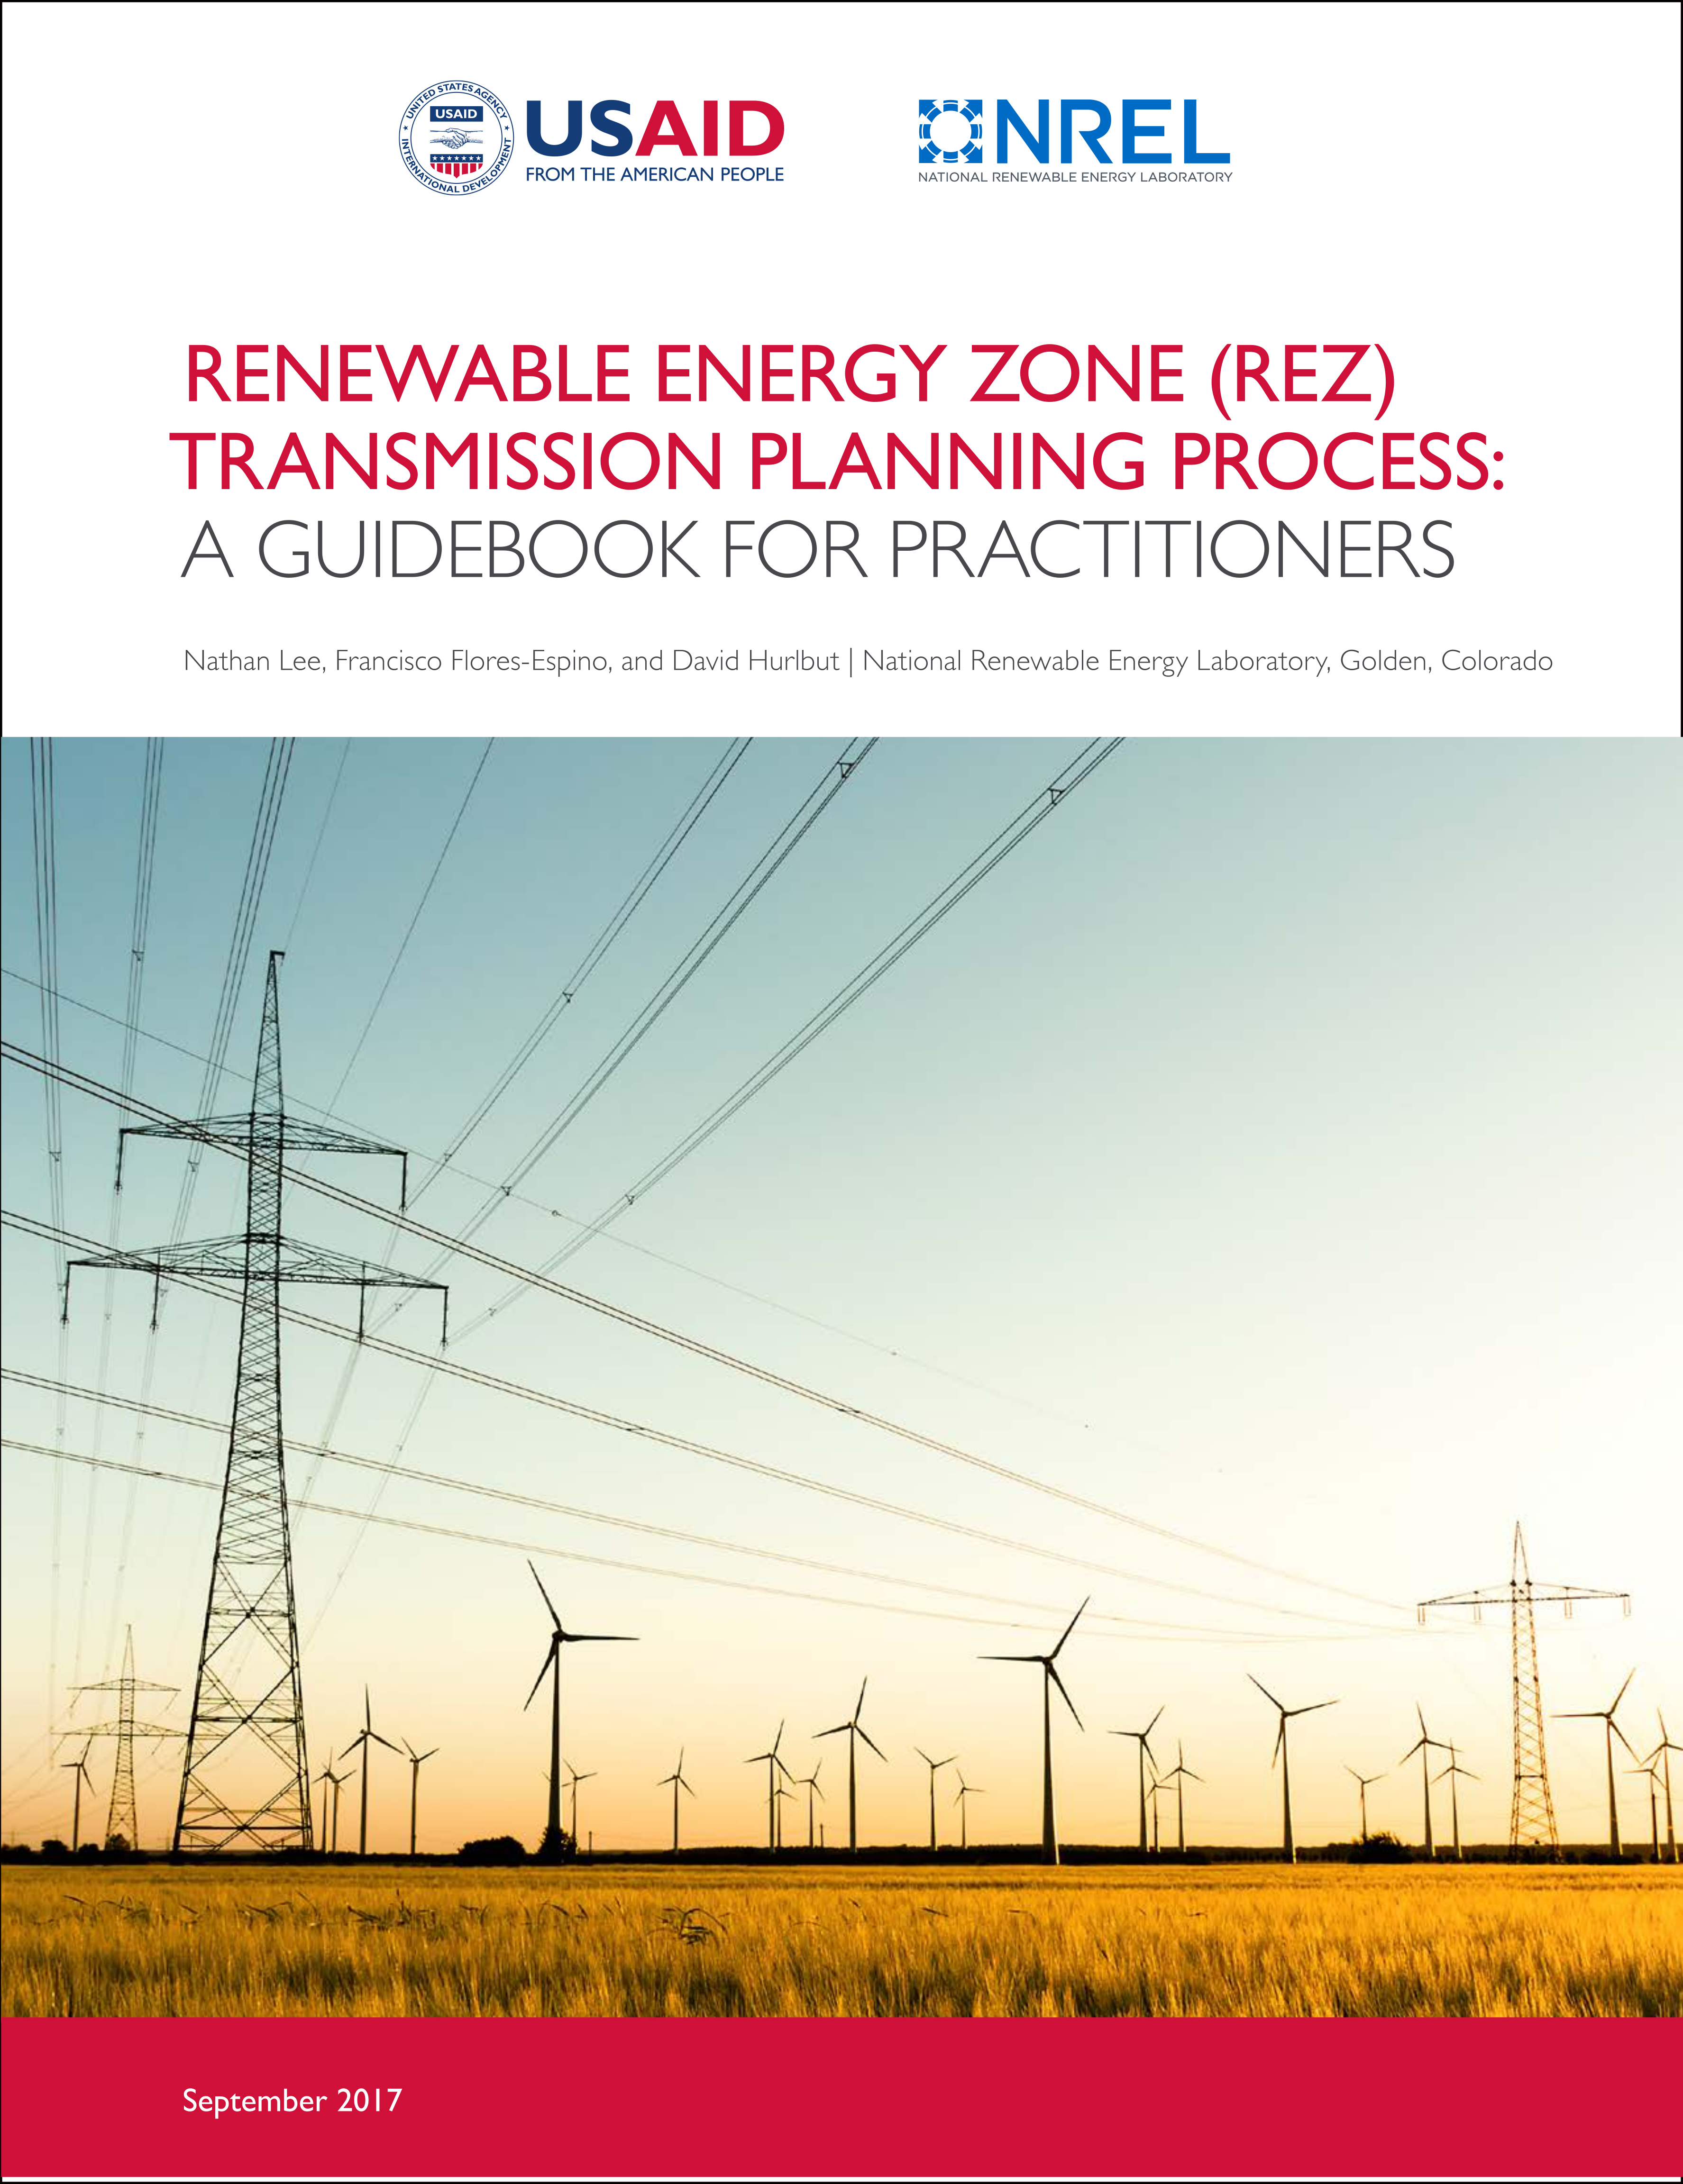 Download REZ Guidebook